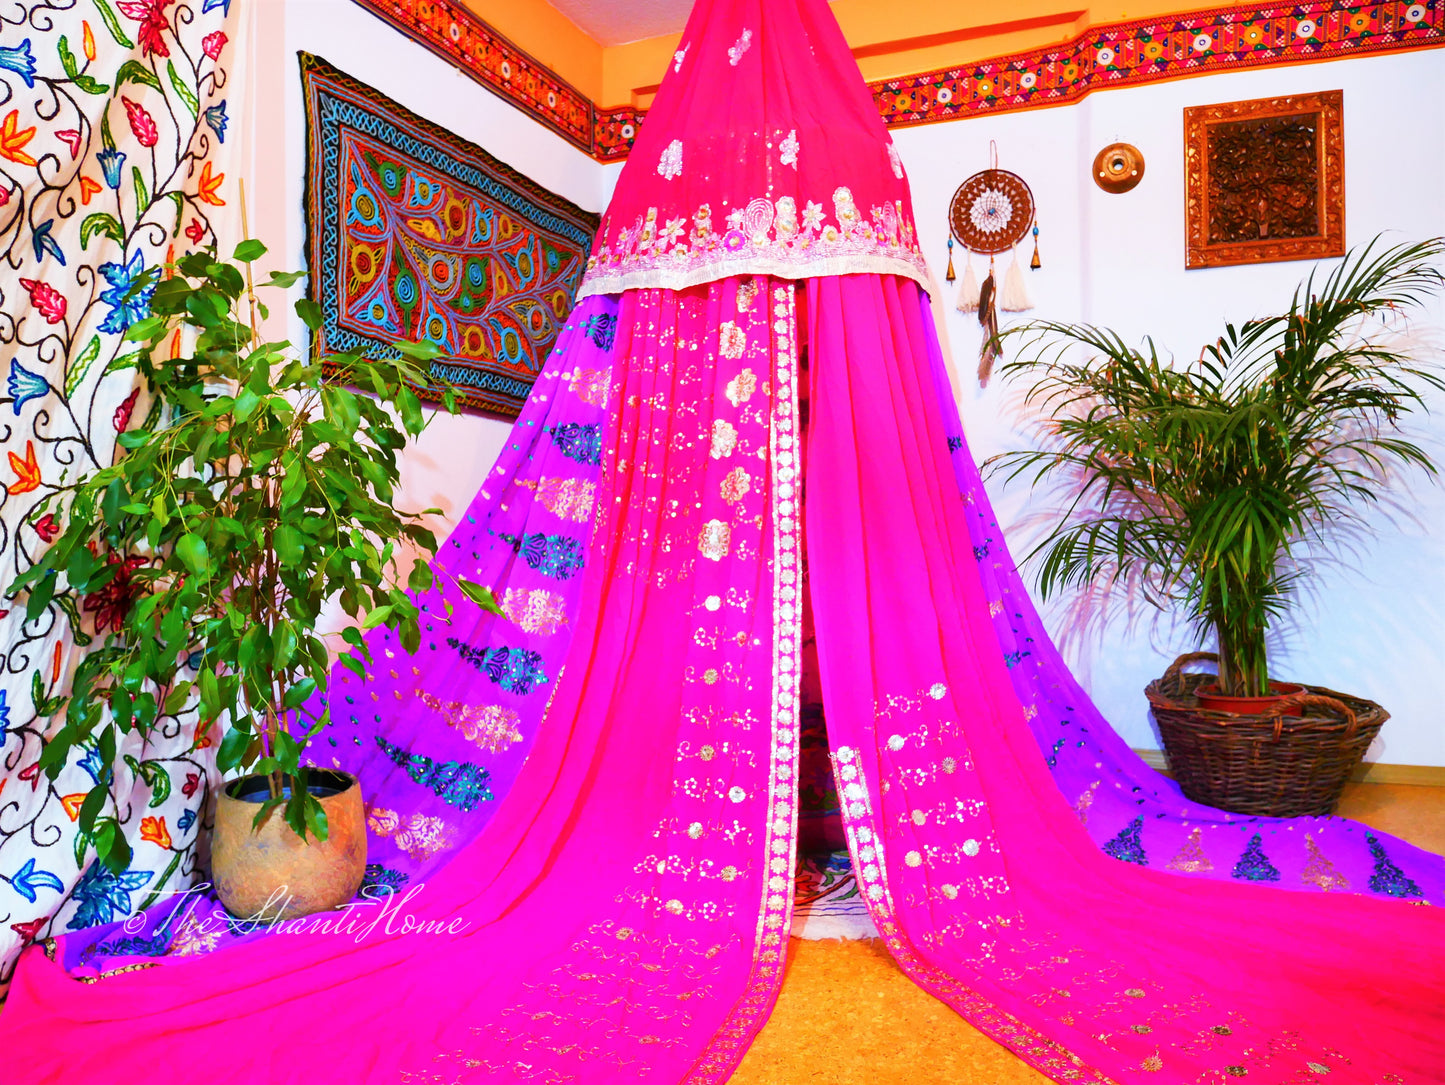 Boho canopy - Saree tent - bed canopy  | bohemian wedding backdrop - Hippie decor - floor seating area | meditation room - Shanti baldachin